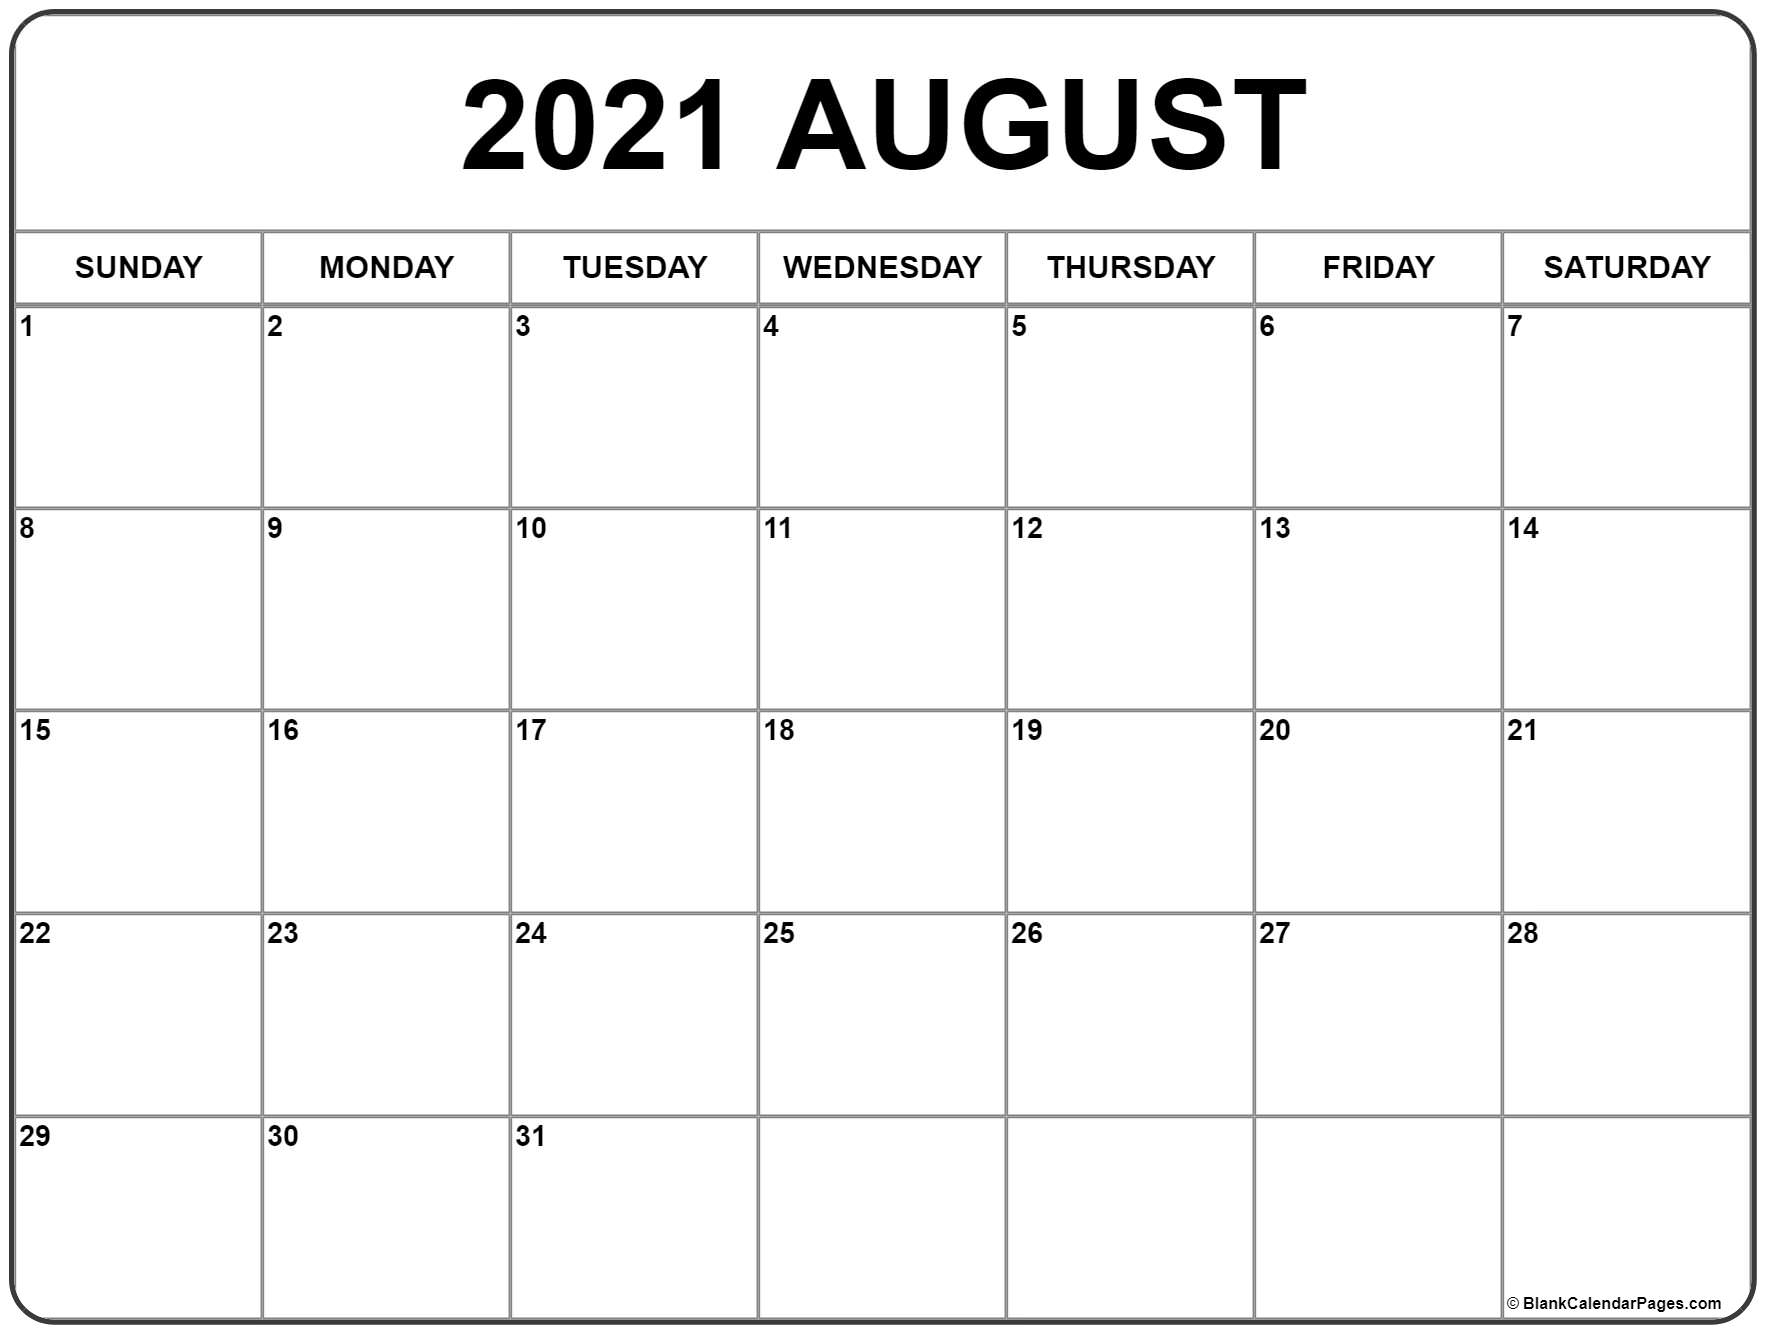 August 2021 Calendar | Free Printable Monthly Calendars